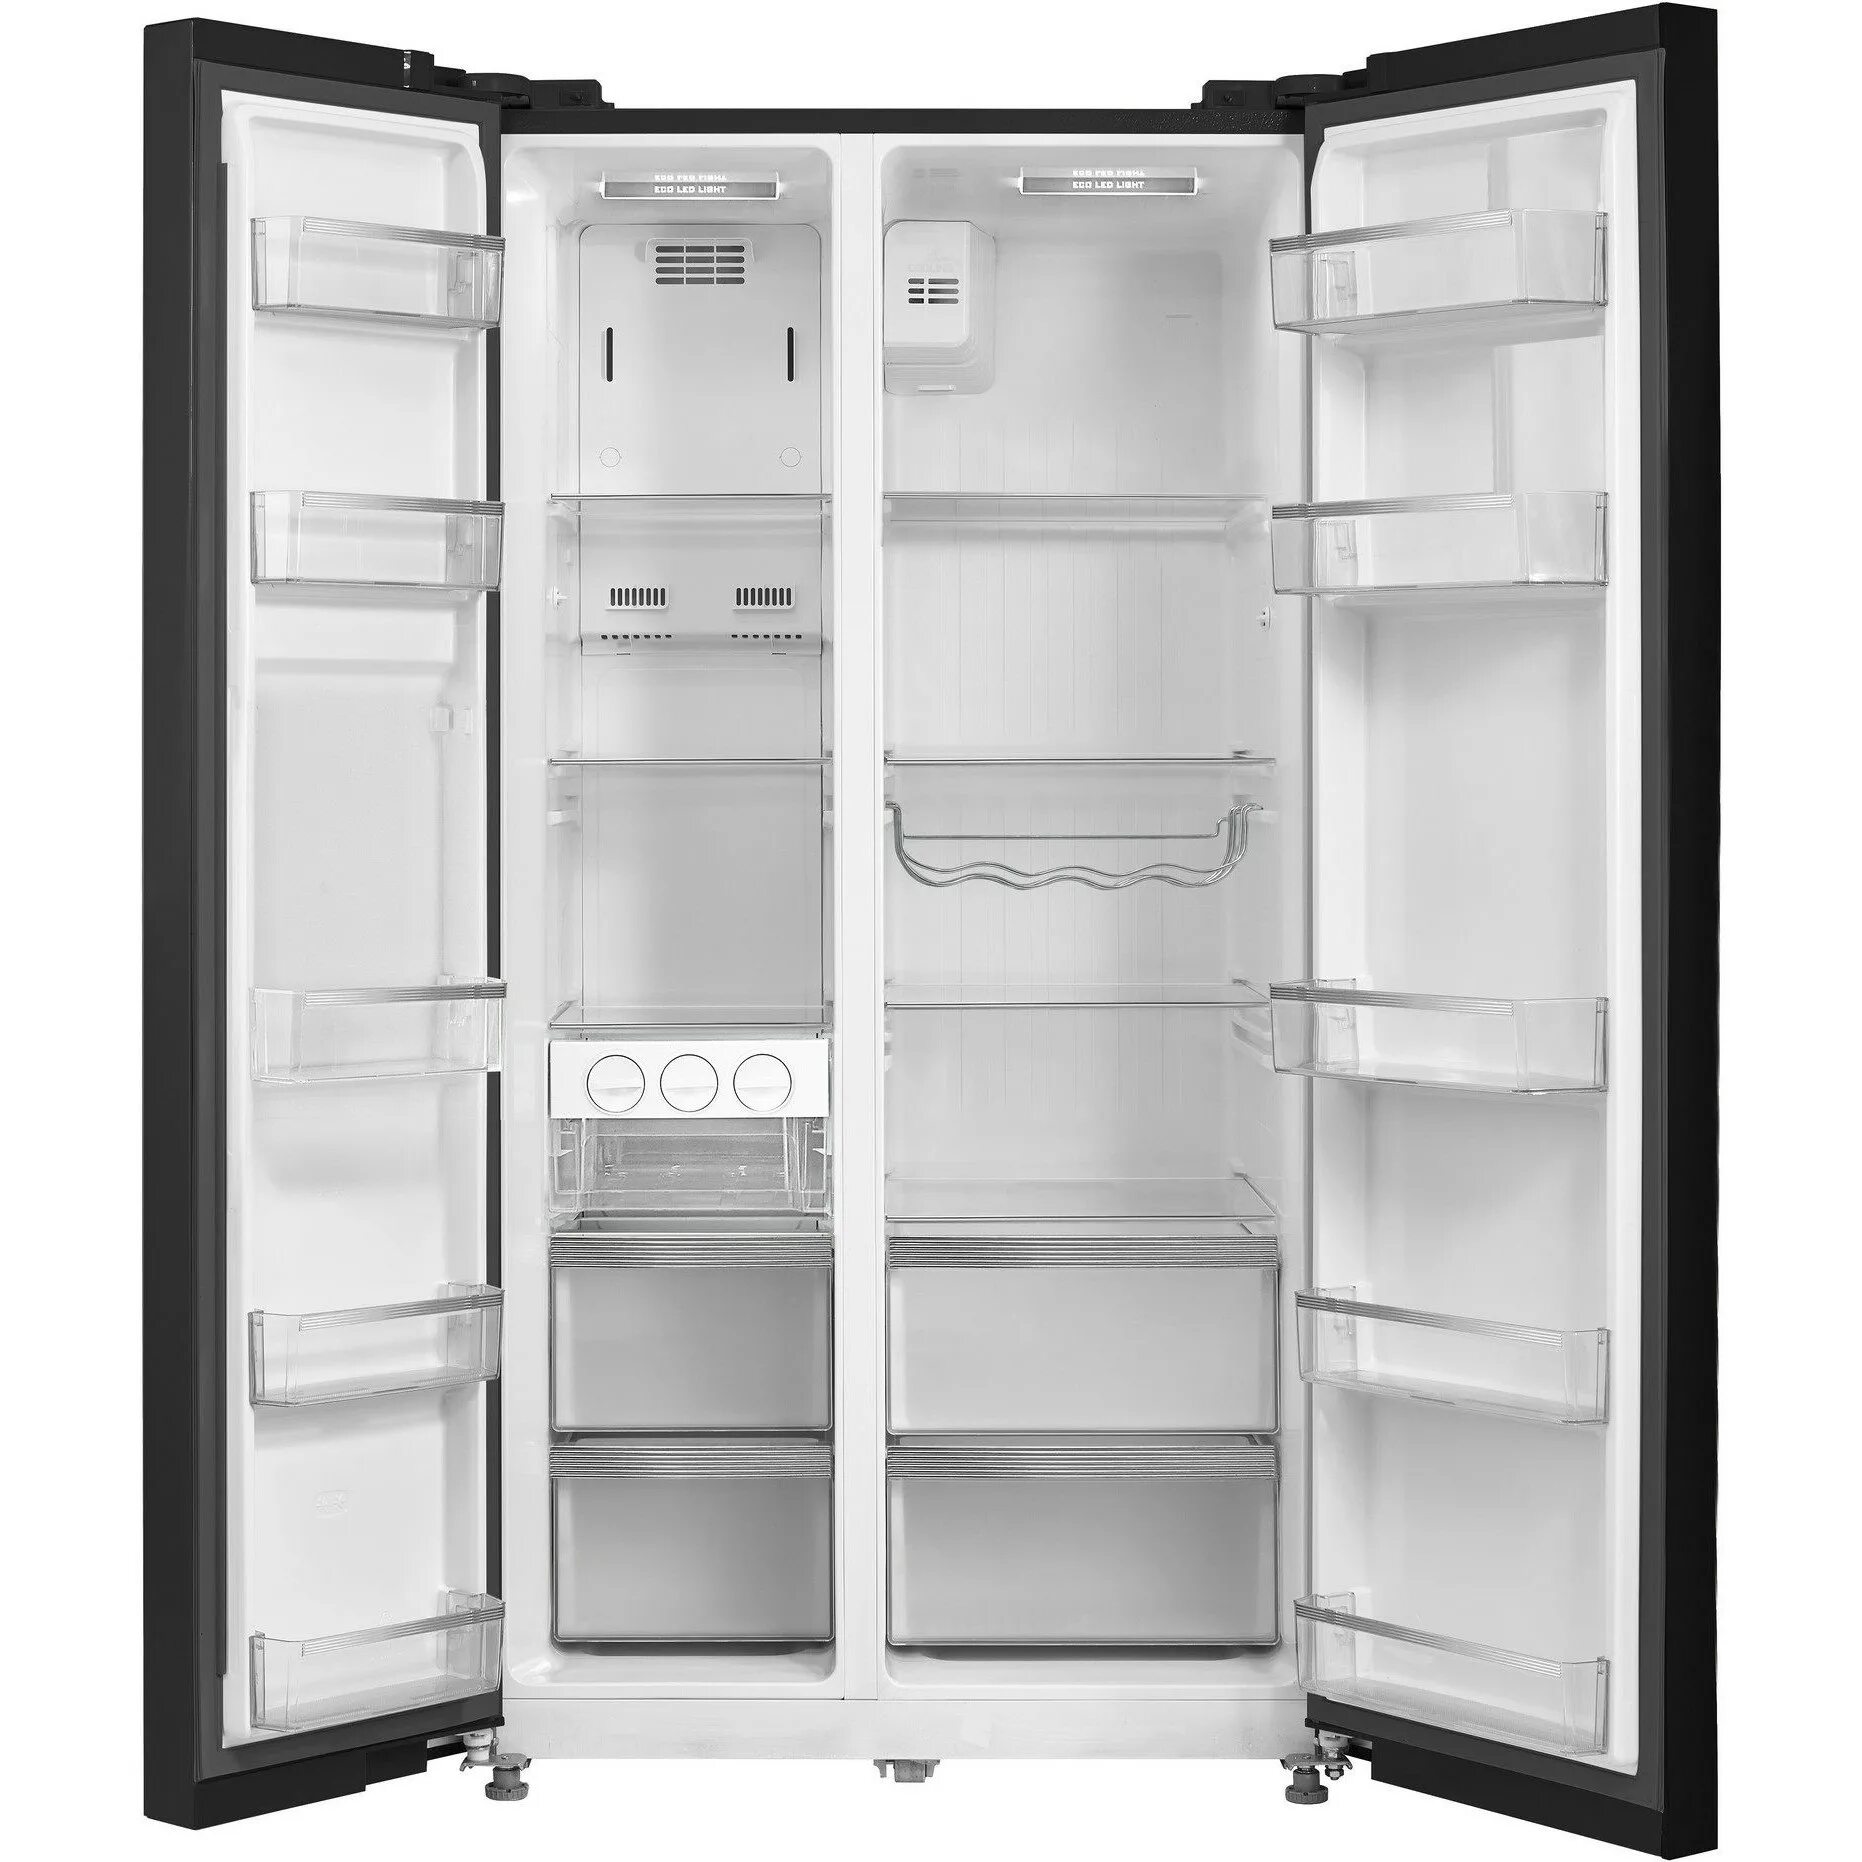 Холодильник DEXP RF-mn520dma/bi. Холодильник DEXP sbs510m. Холодильник DEXP Side by Side. Холодильник дексп в ДНС черный.